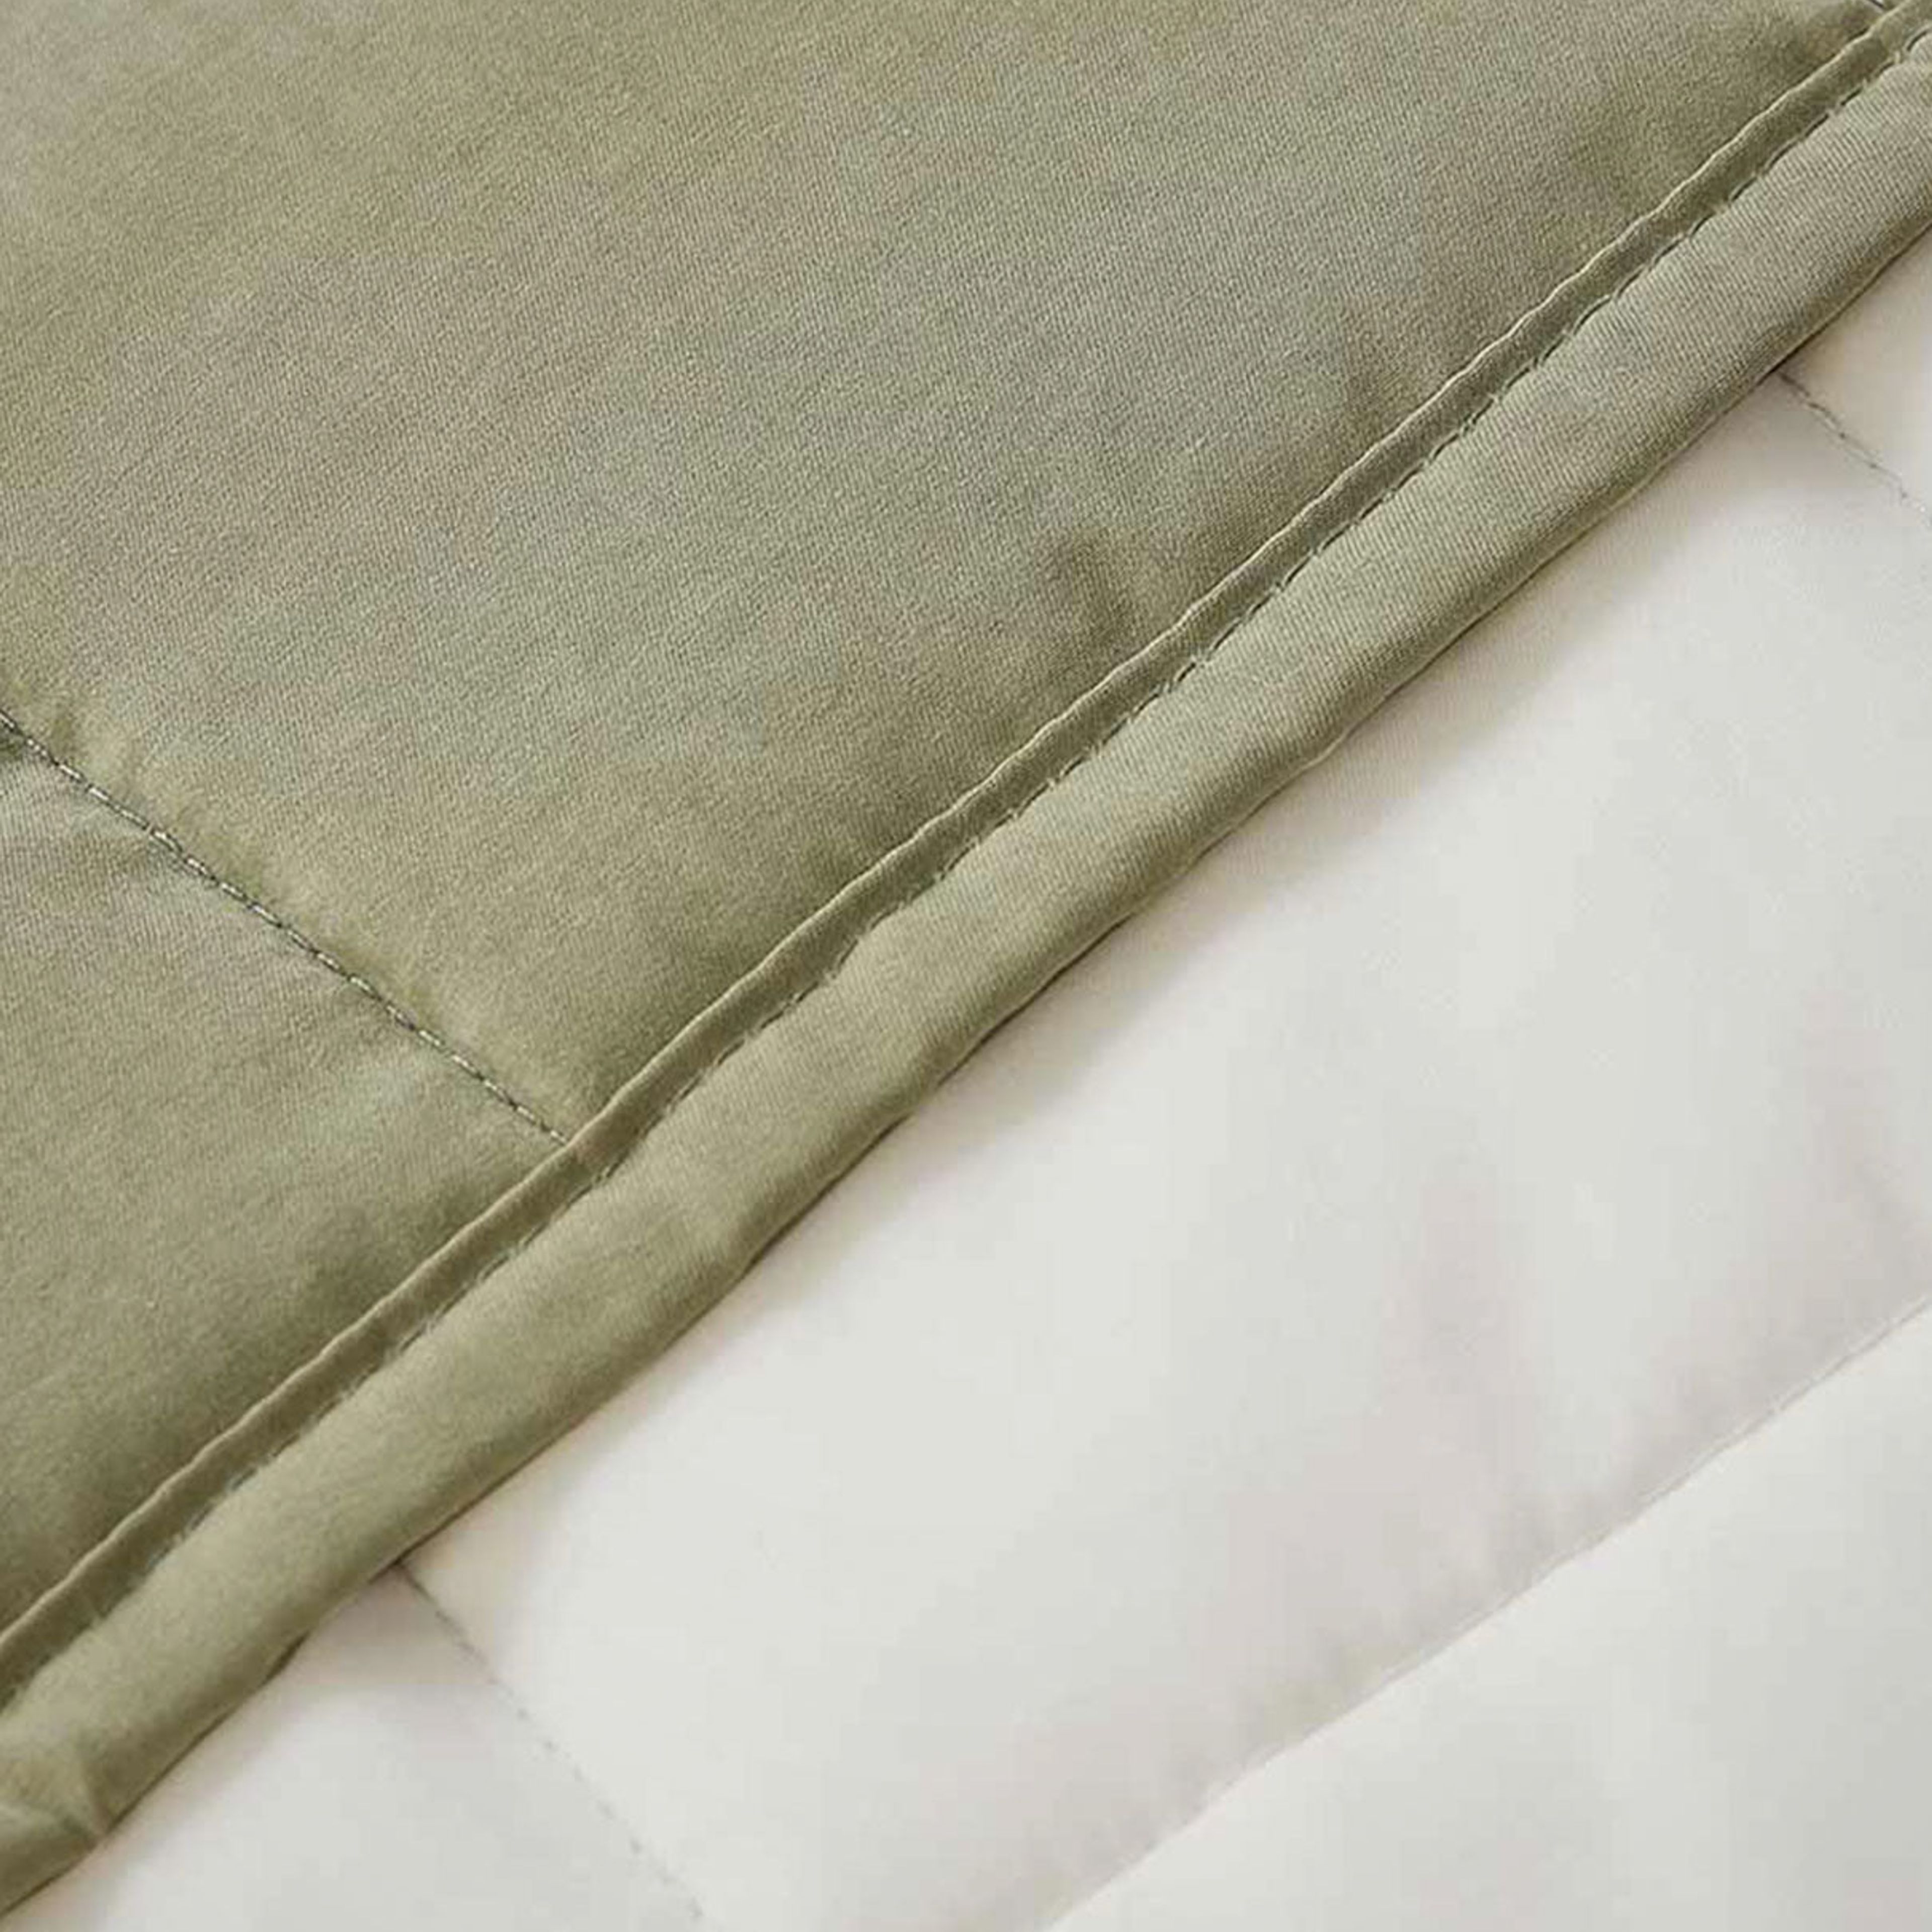 Original Cotton-Polyester Weighted Blanket